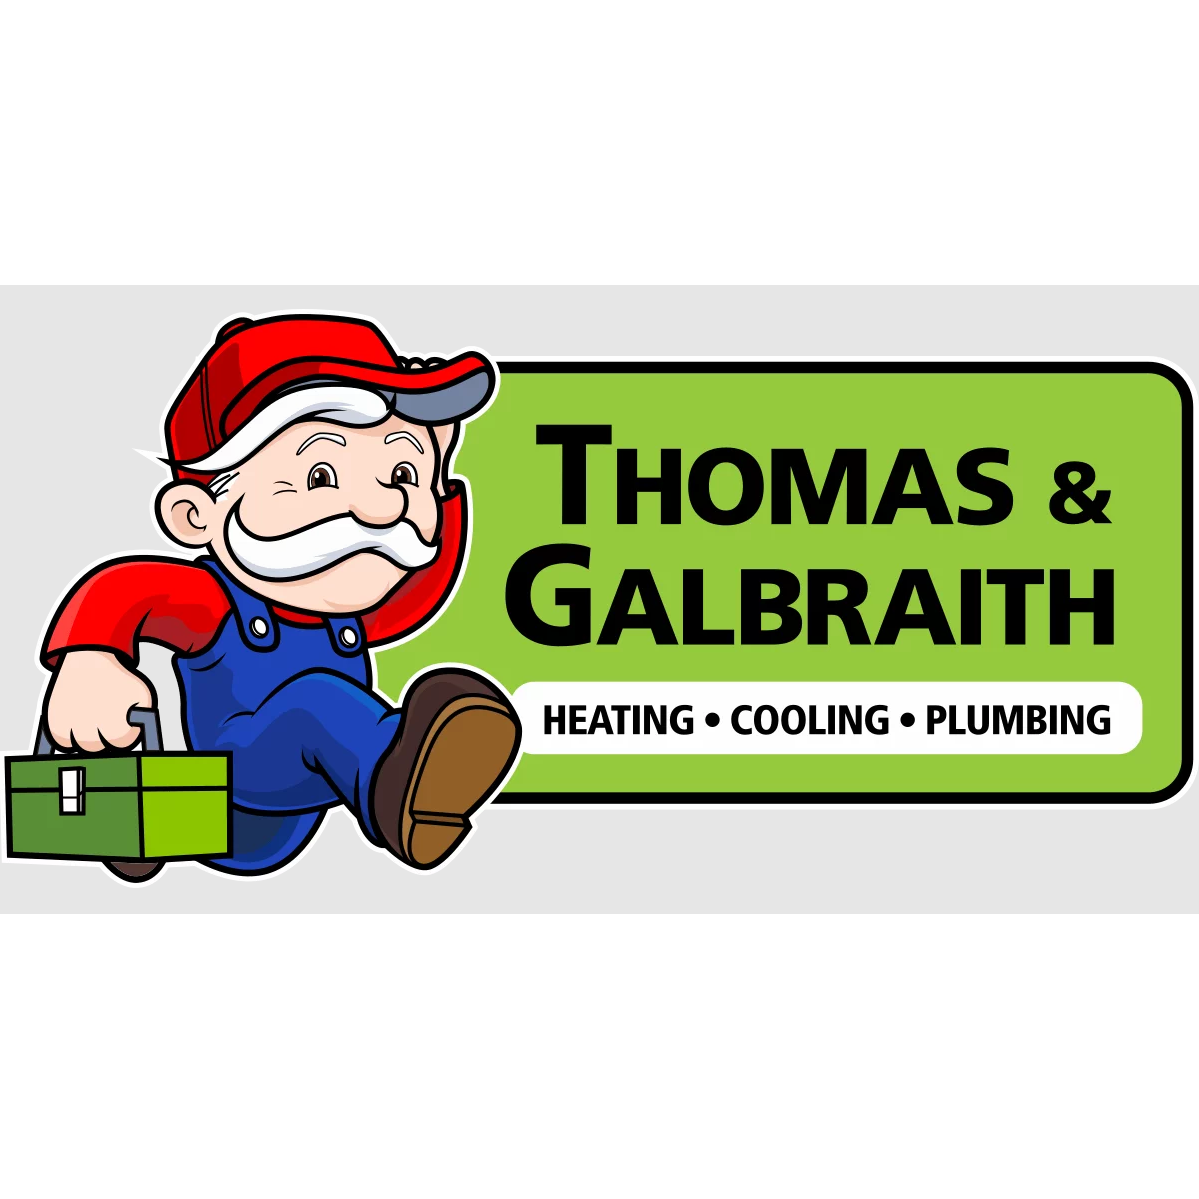 Thomas & Galbraith Heating, Cooling & Plumbing - Dayton, OH 45414 - (937)345-0448 | ShowMeLocal.com